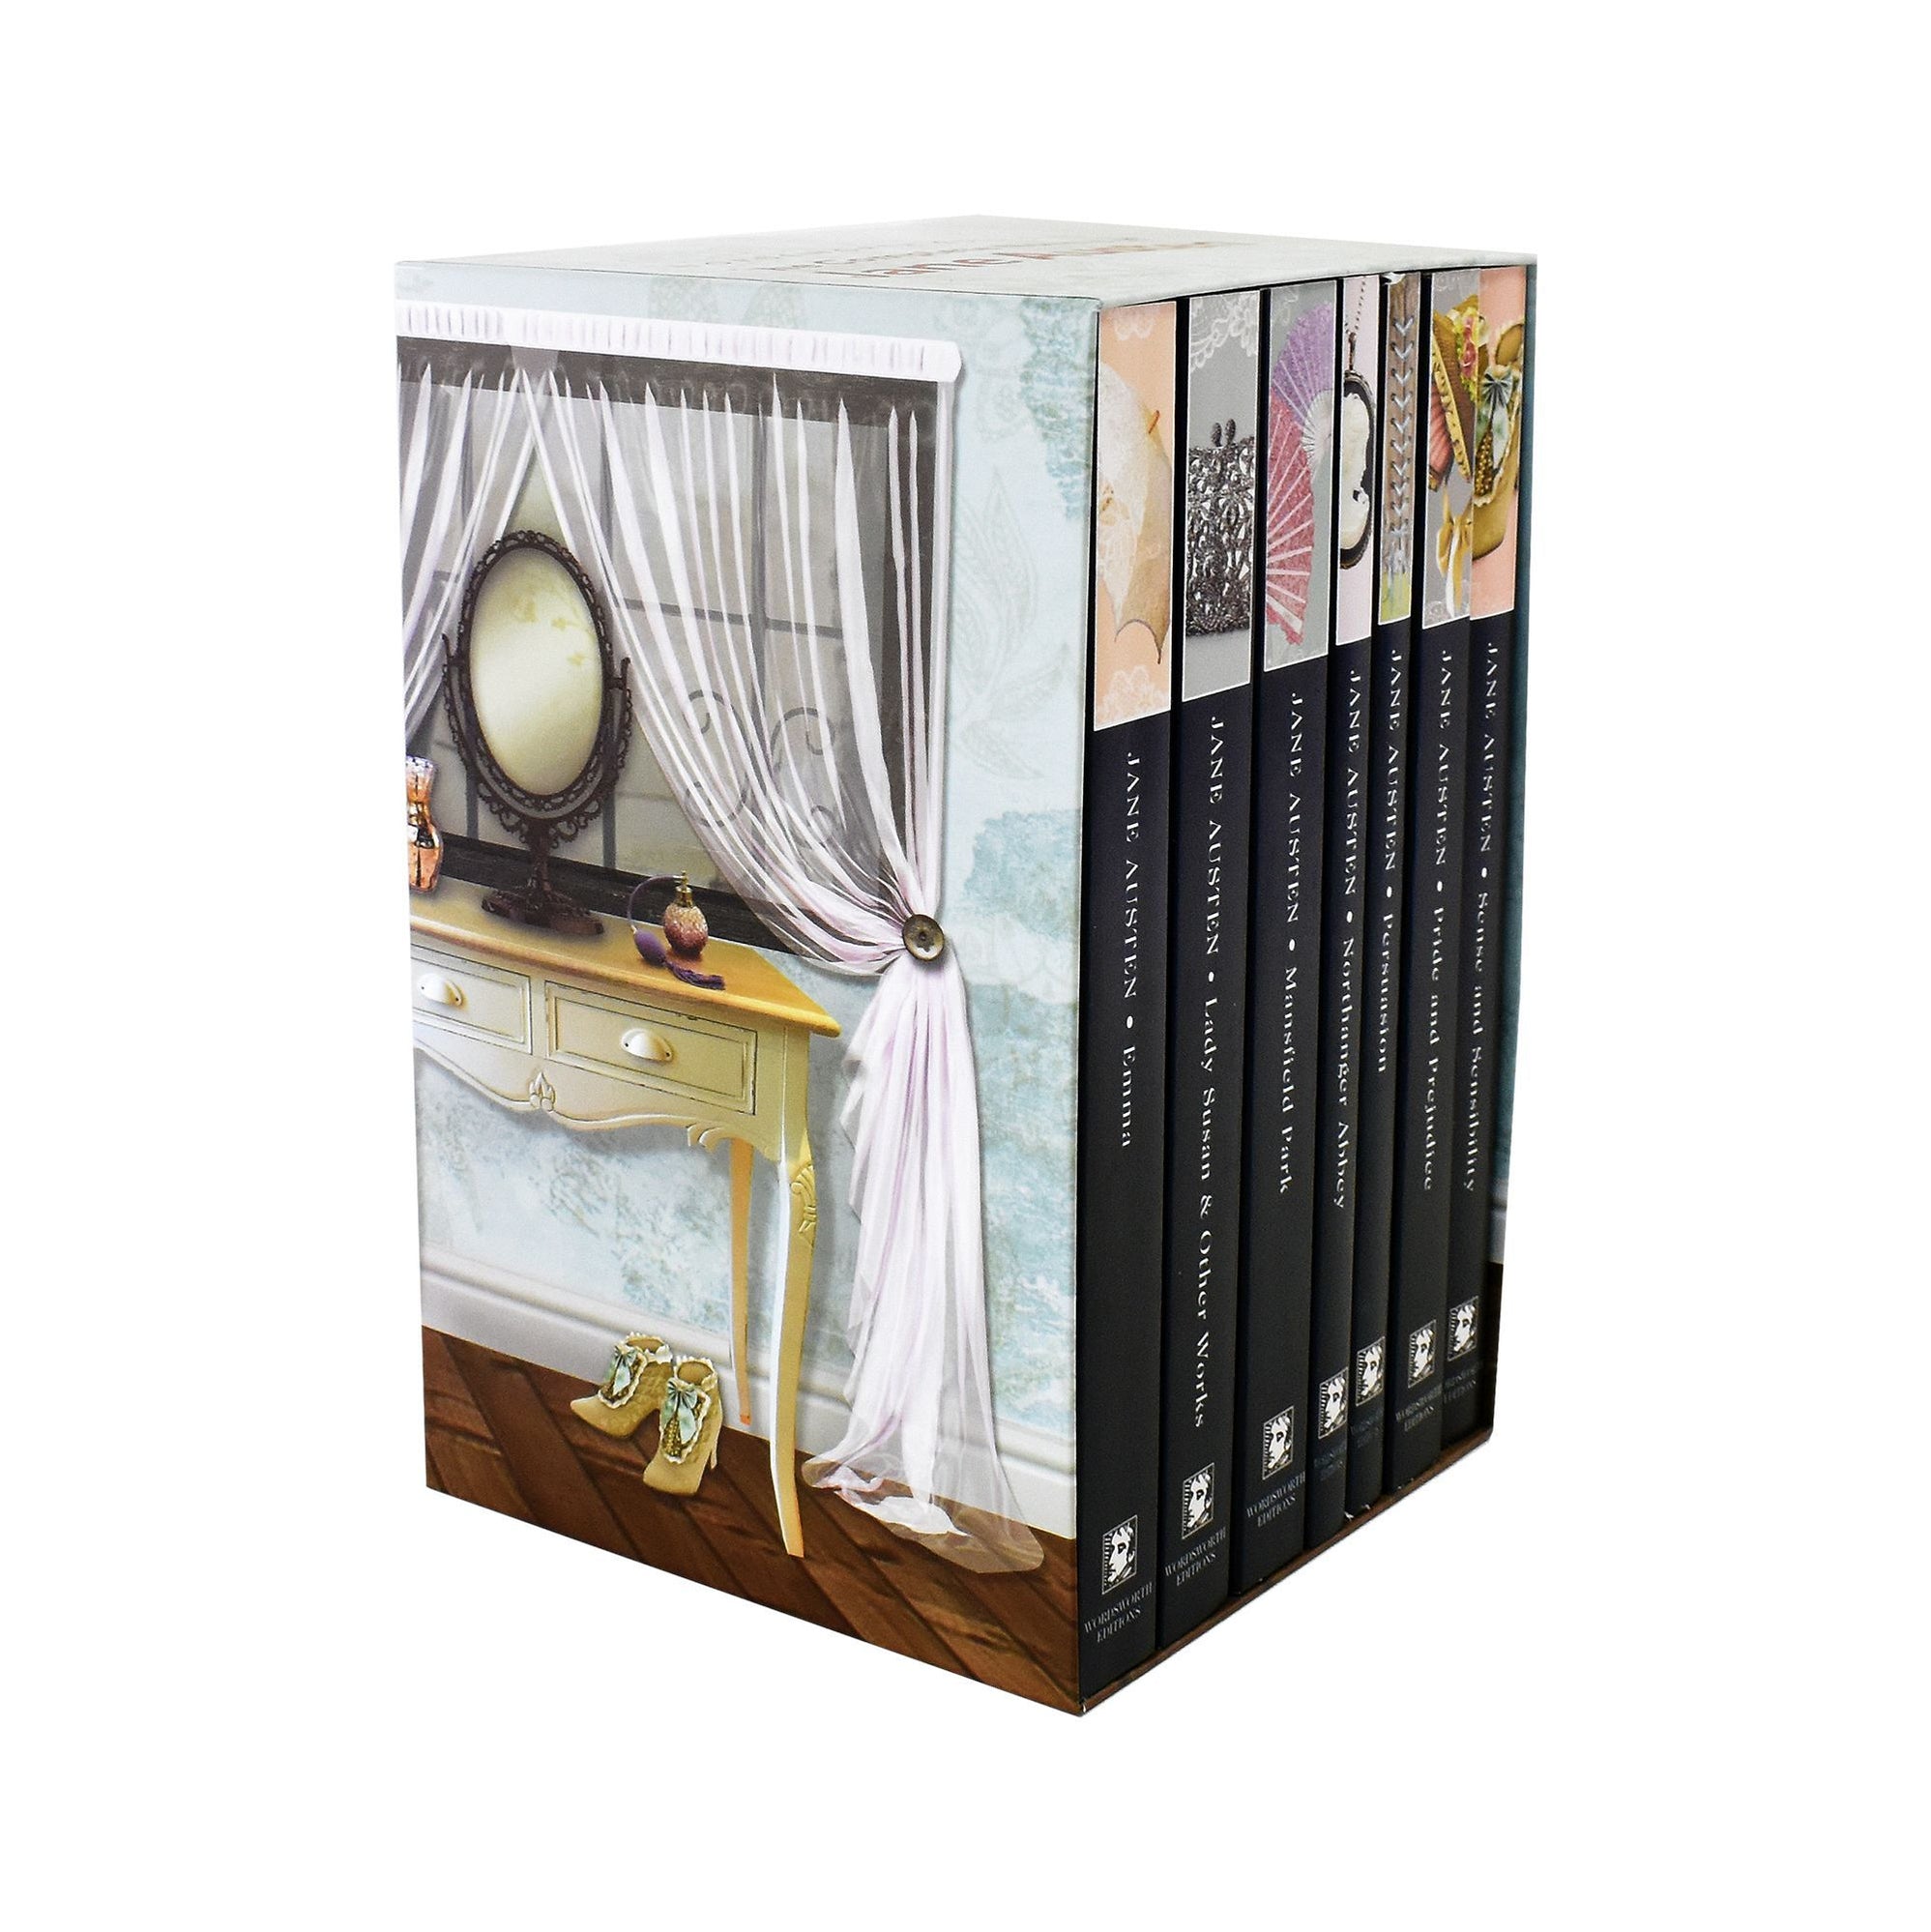 Jane Austen, Game Theorist by Michael Suk-Young Chwe